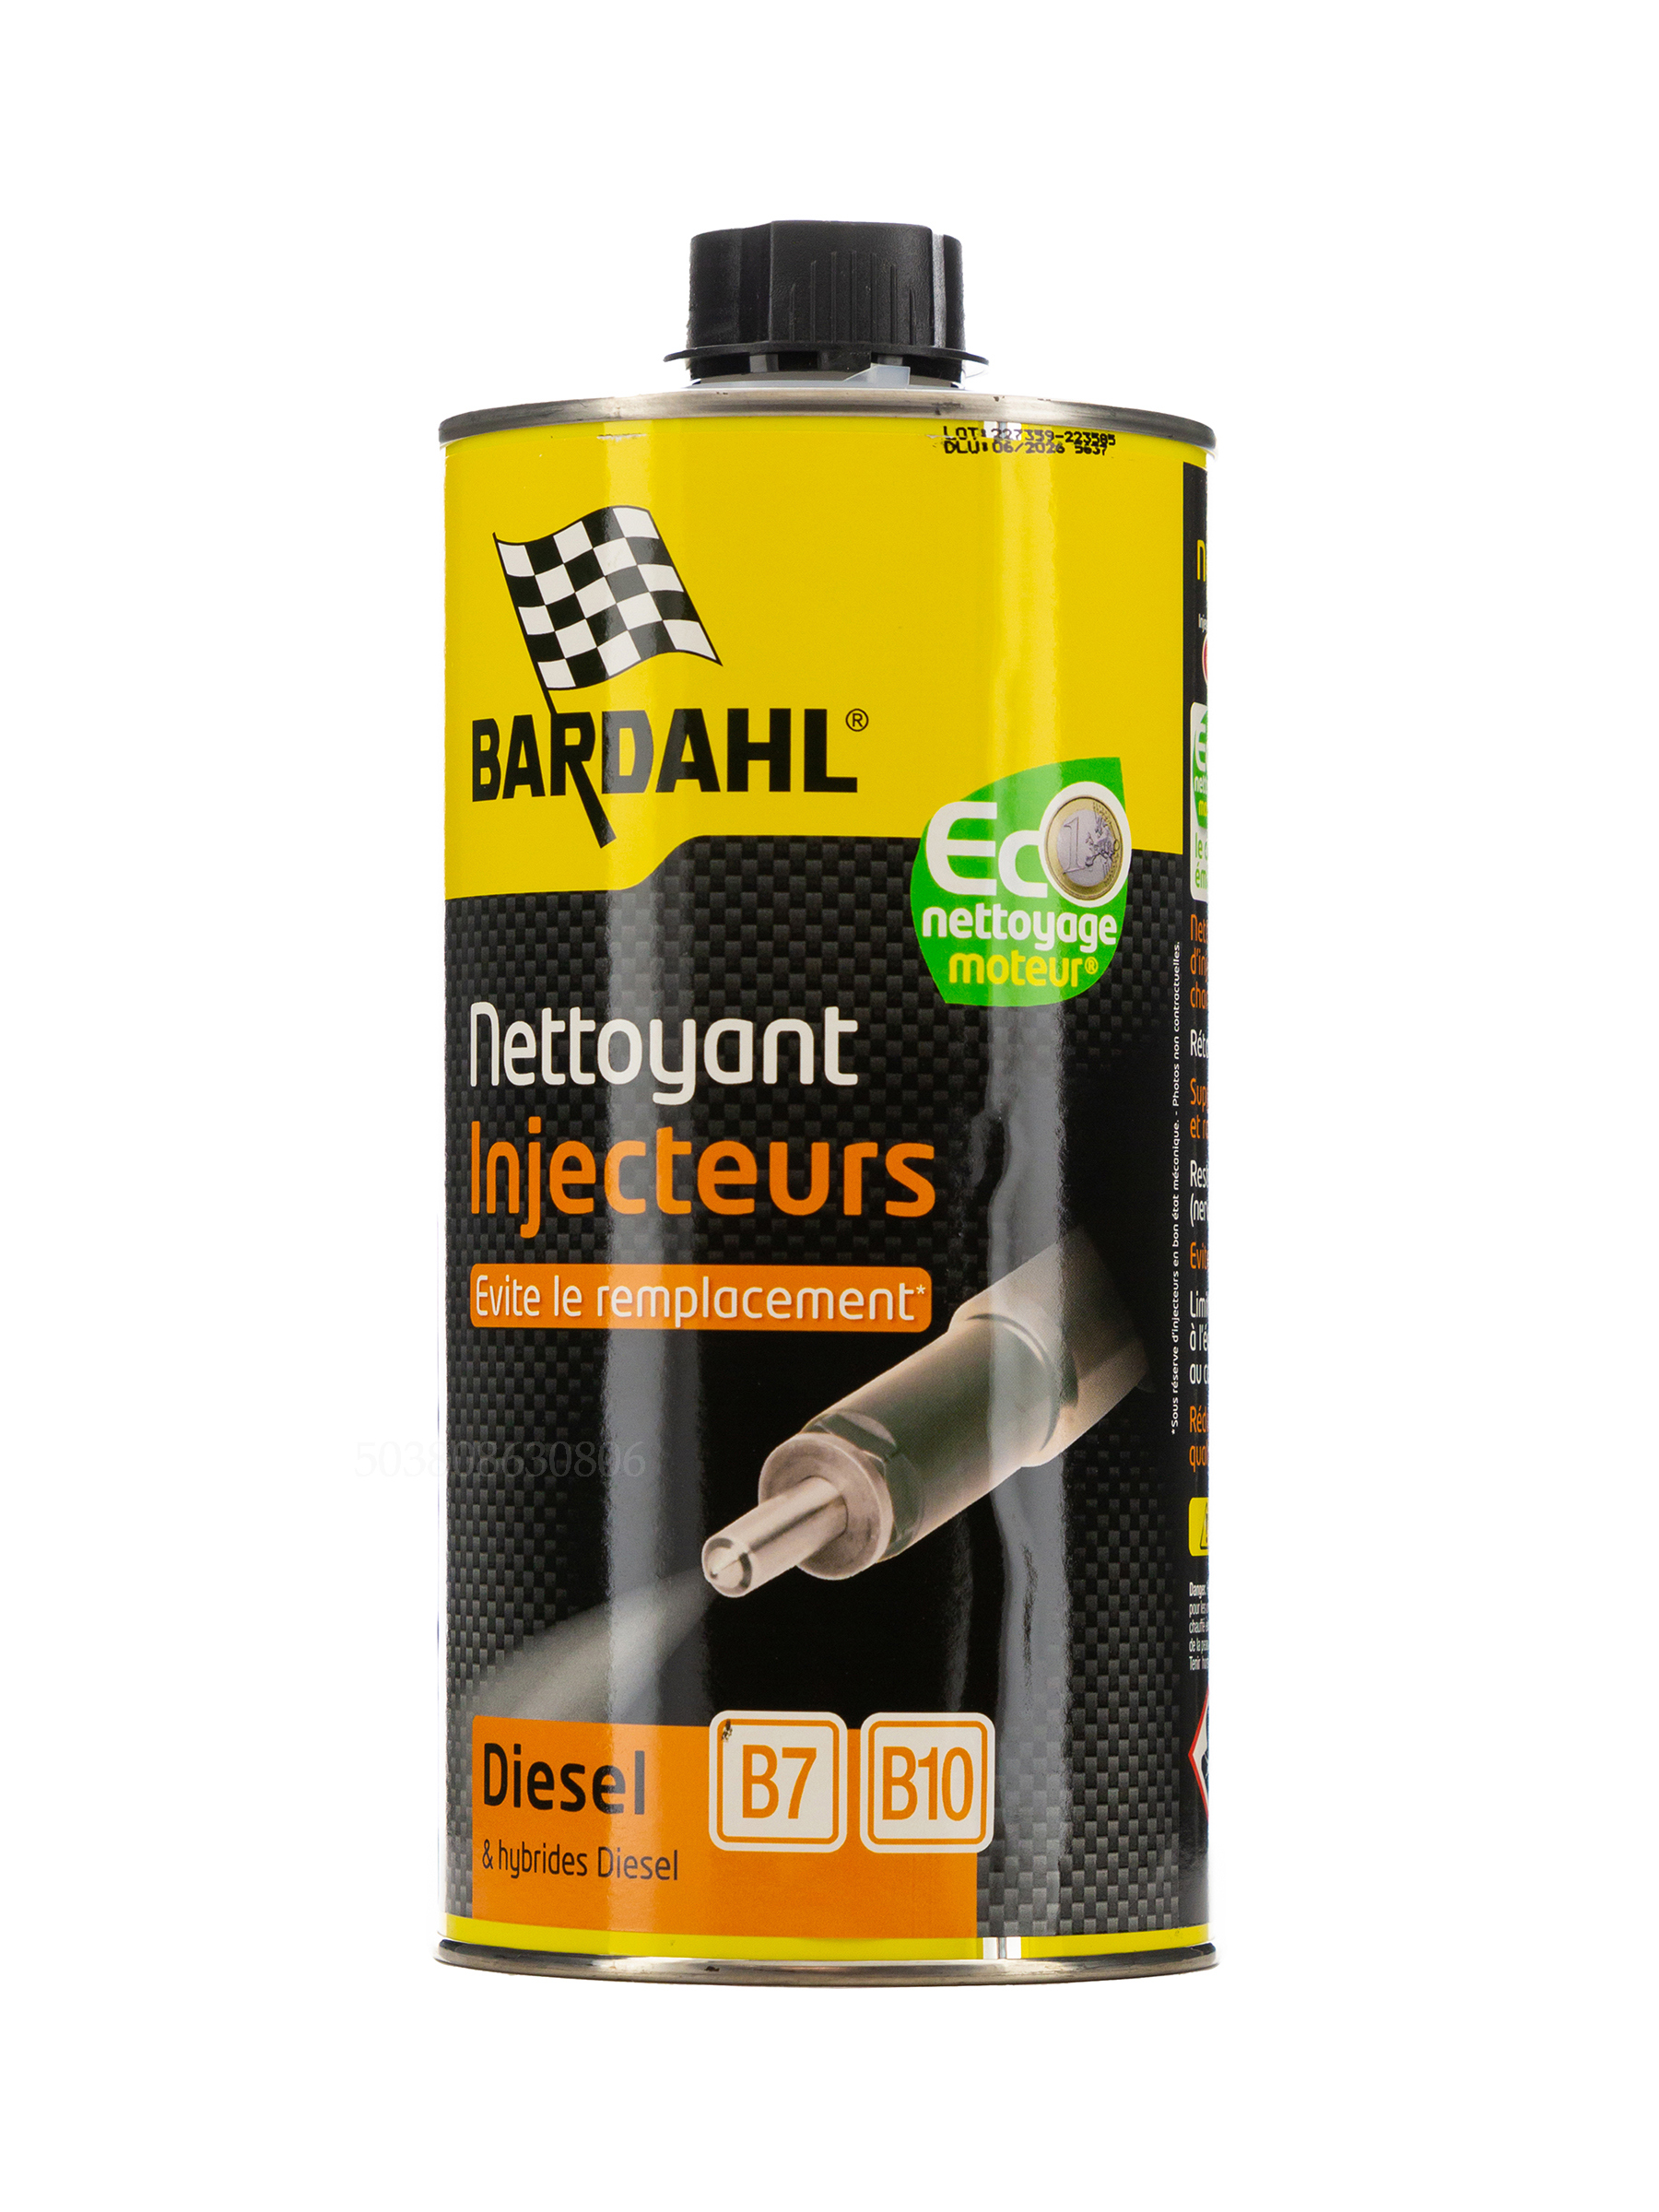 Bardahl, Nettoyant injecteurs - Diesel